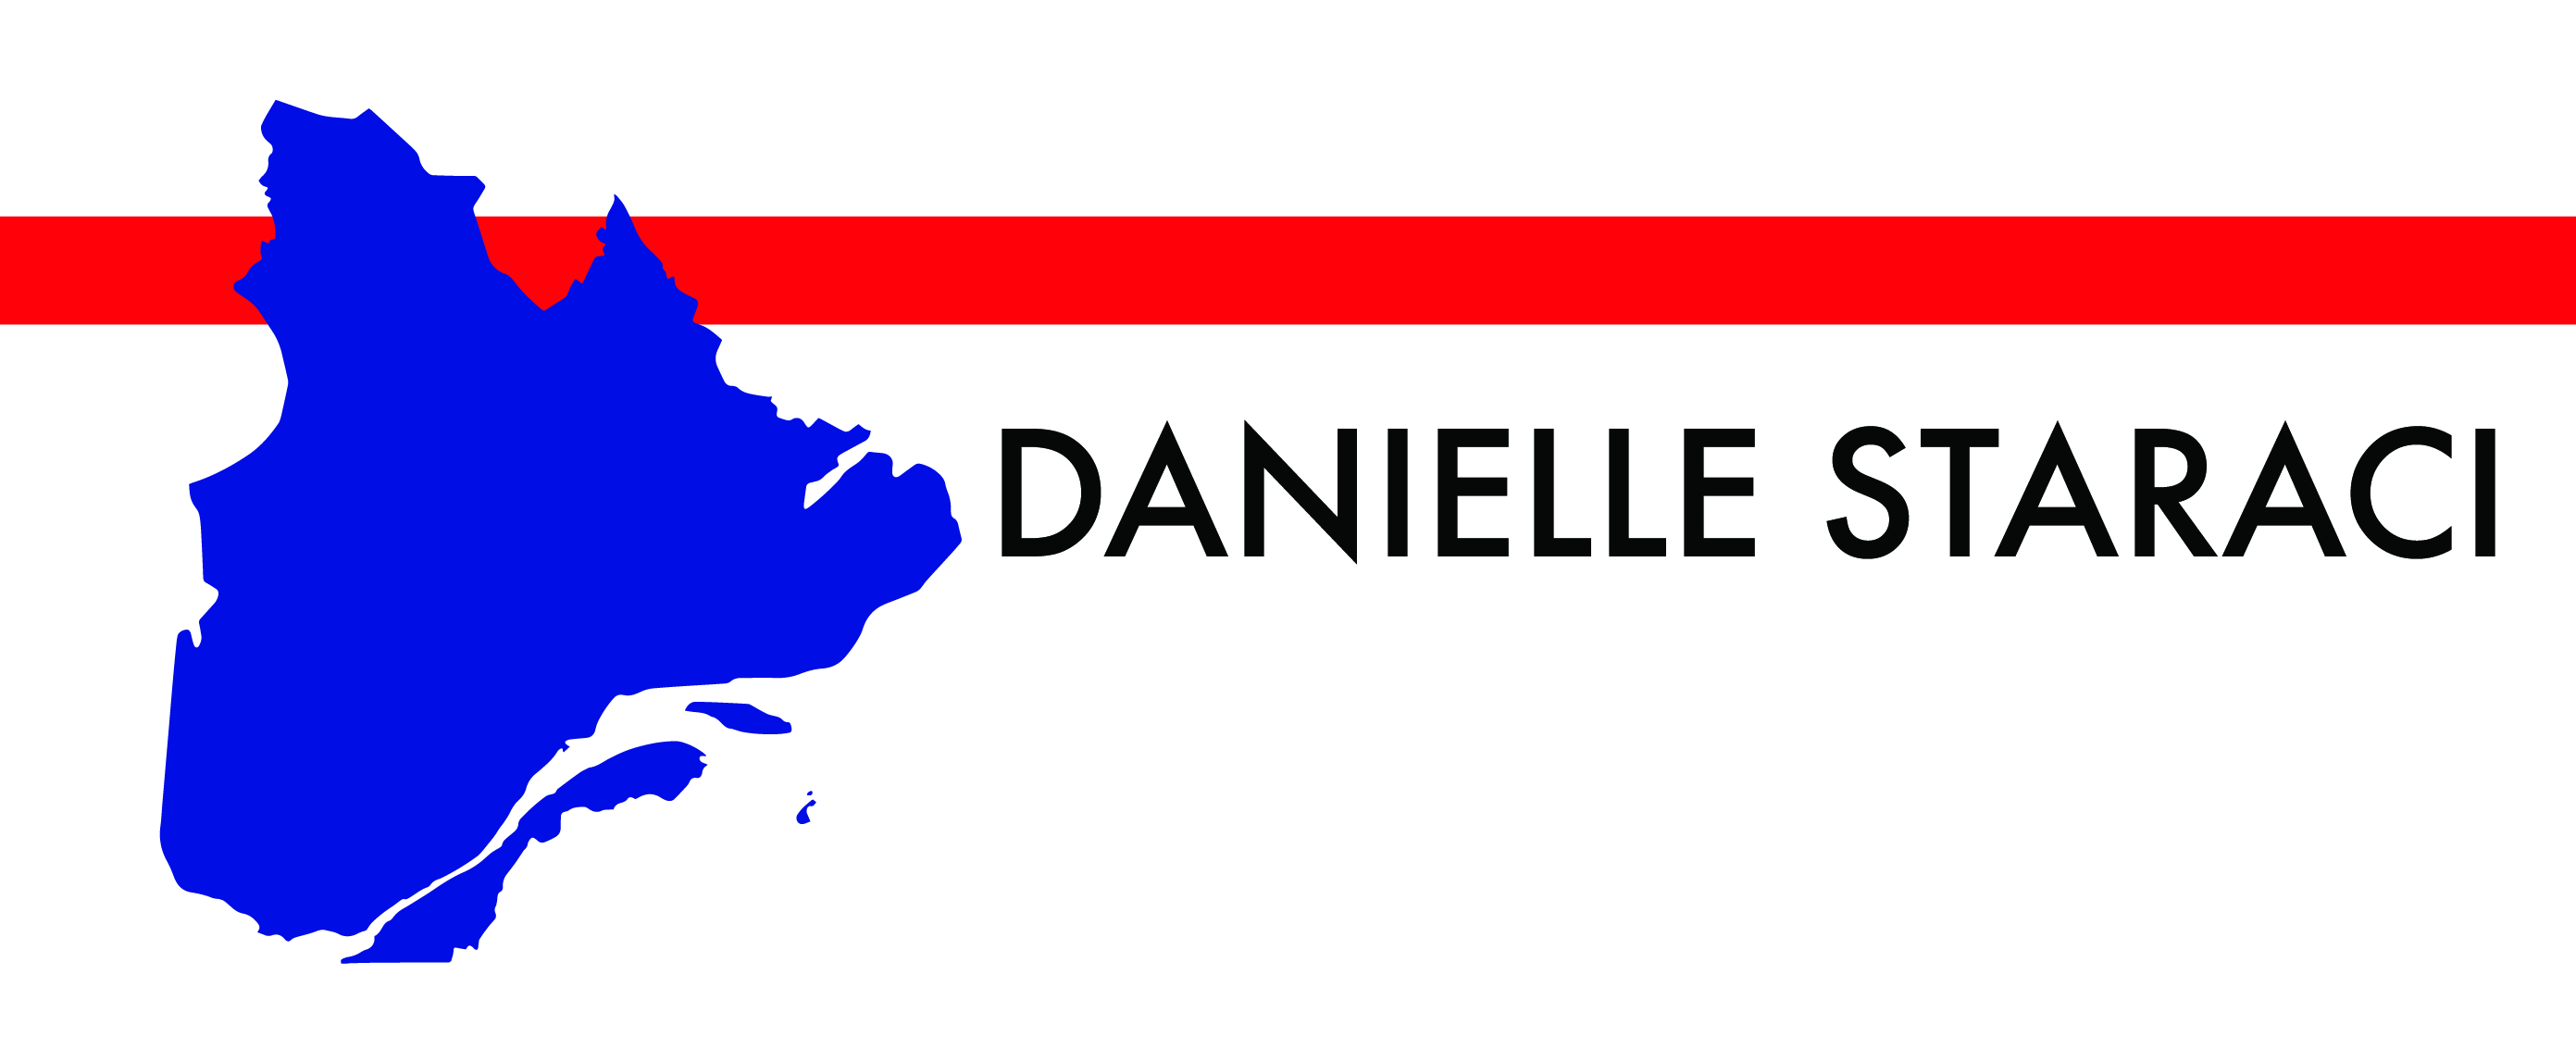 Danielle Staraci Mobilité Logo